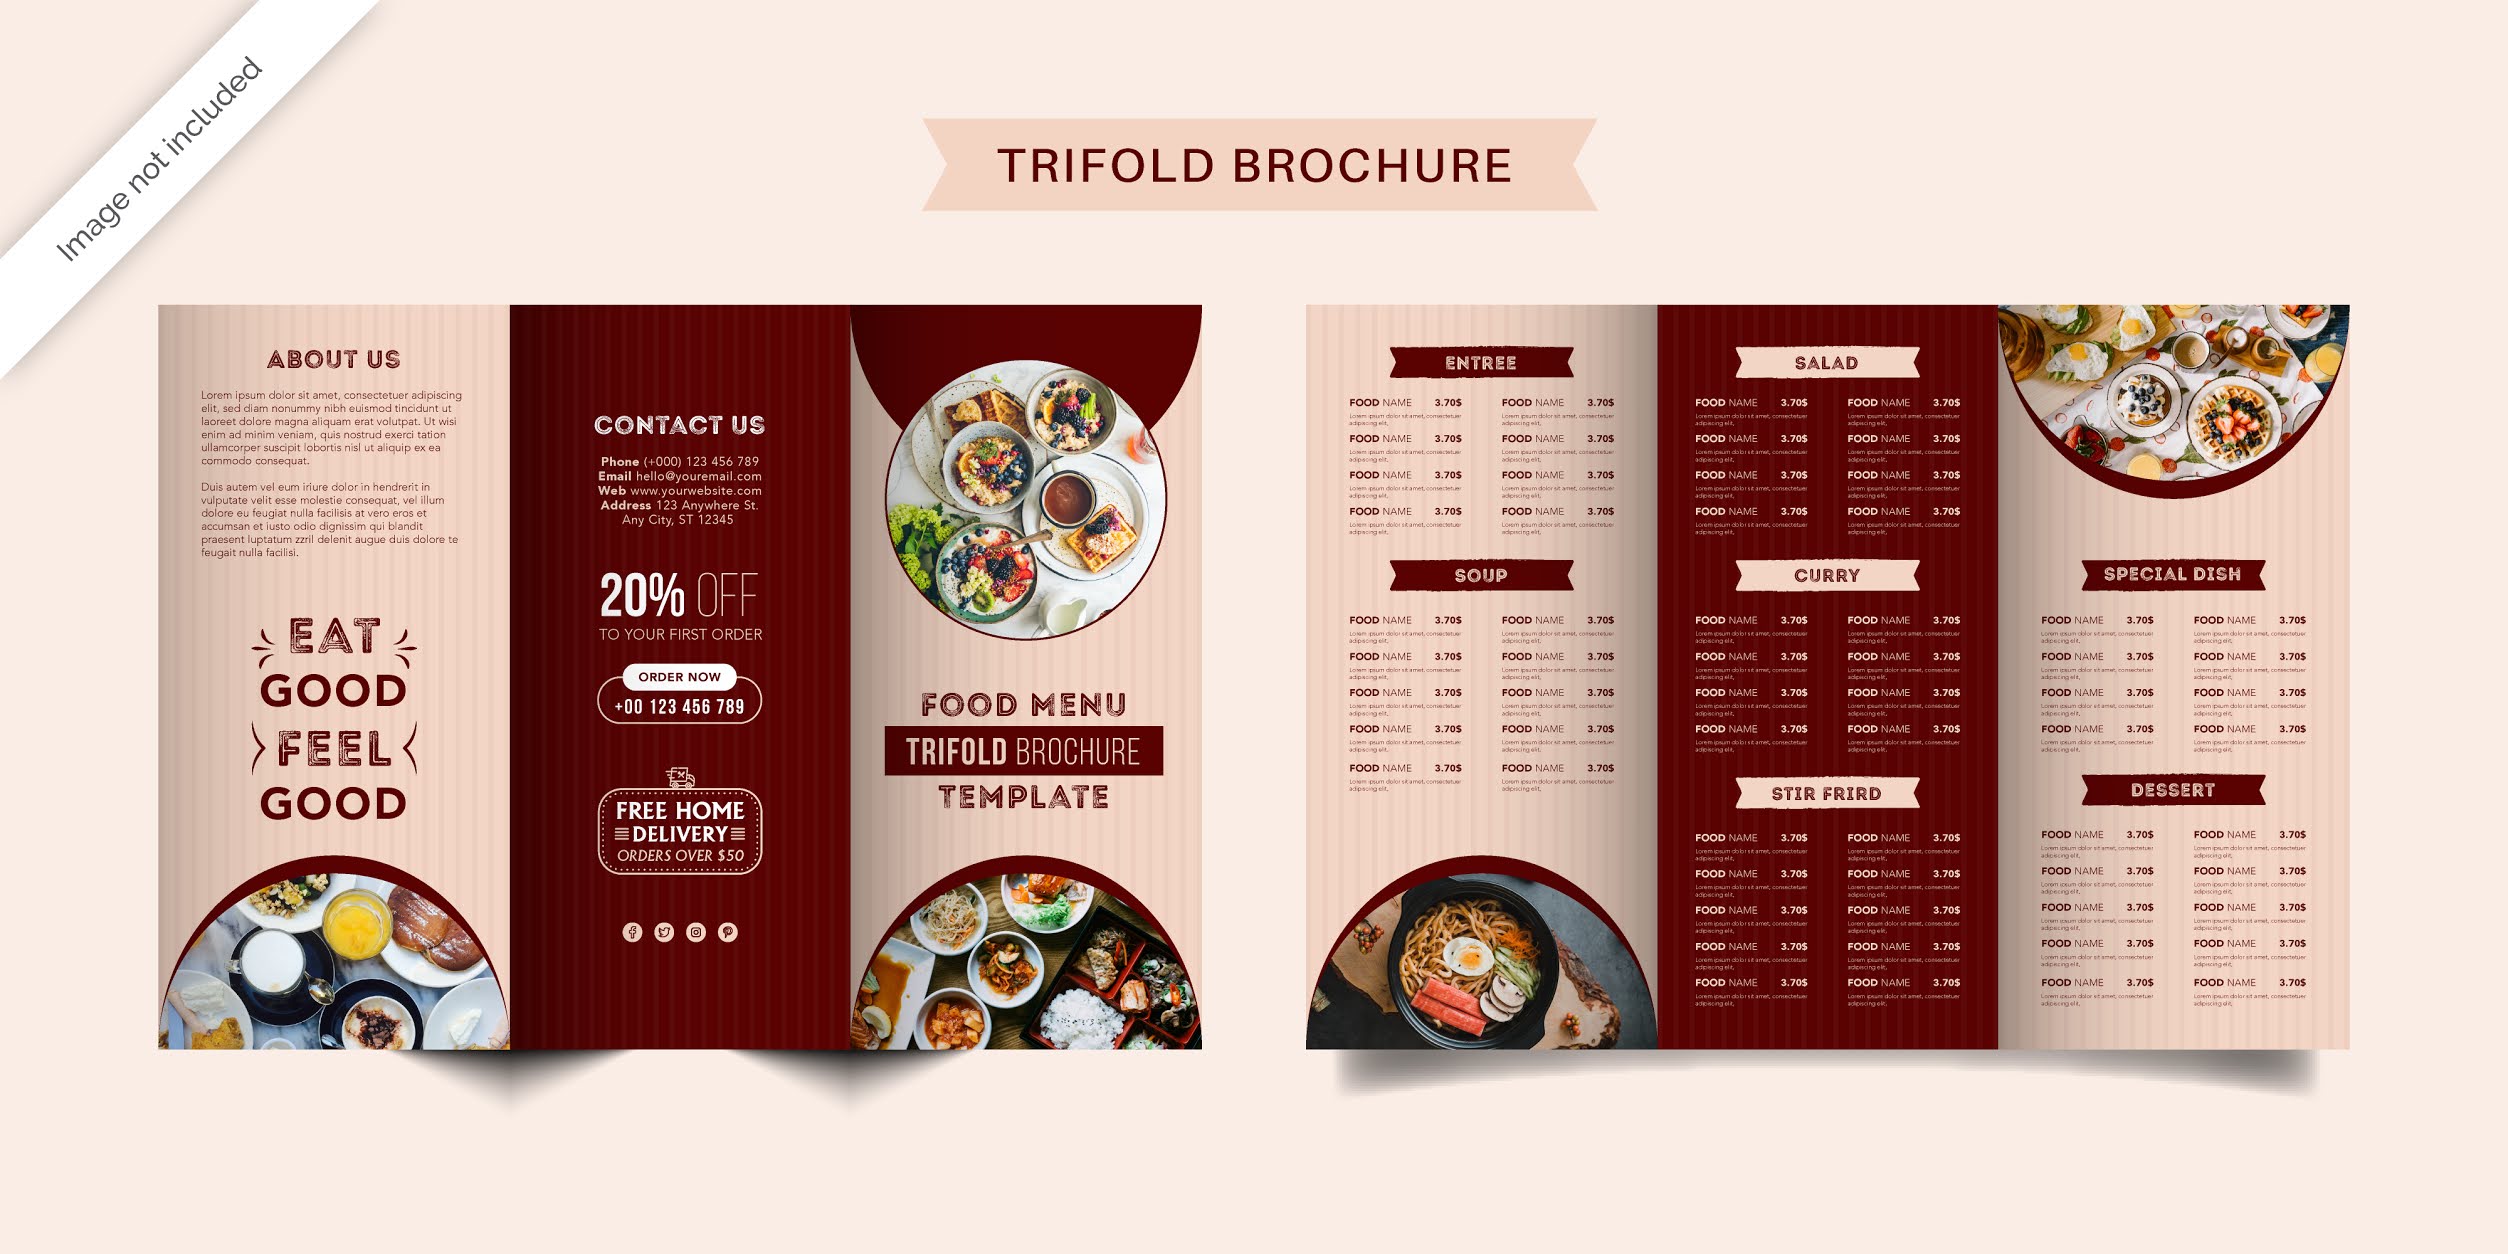 Free download food brochure 7 professional designs 1 set in vector format